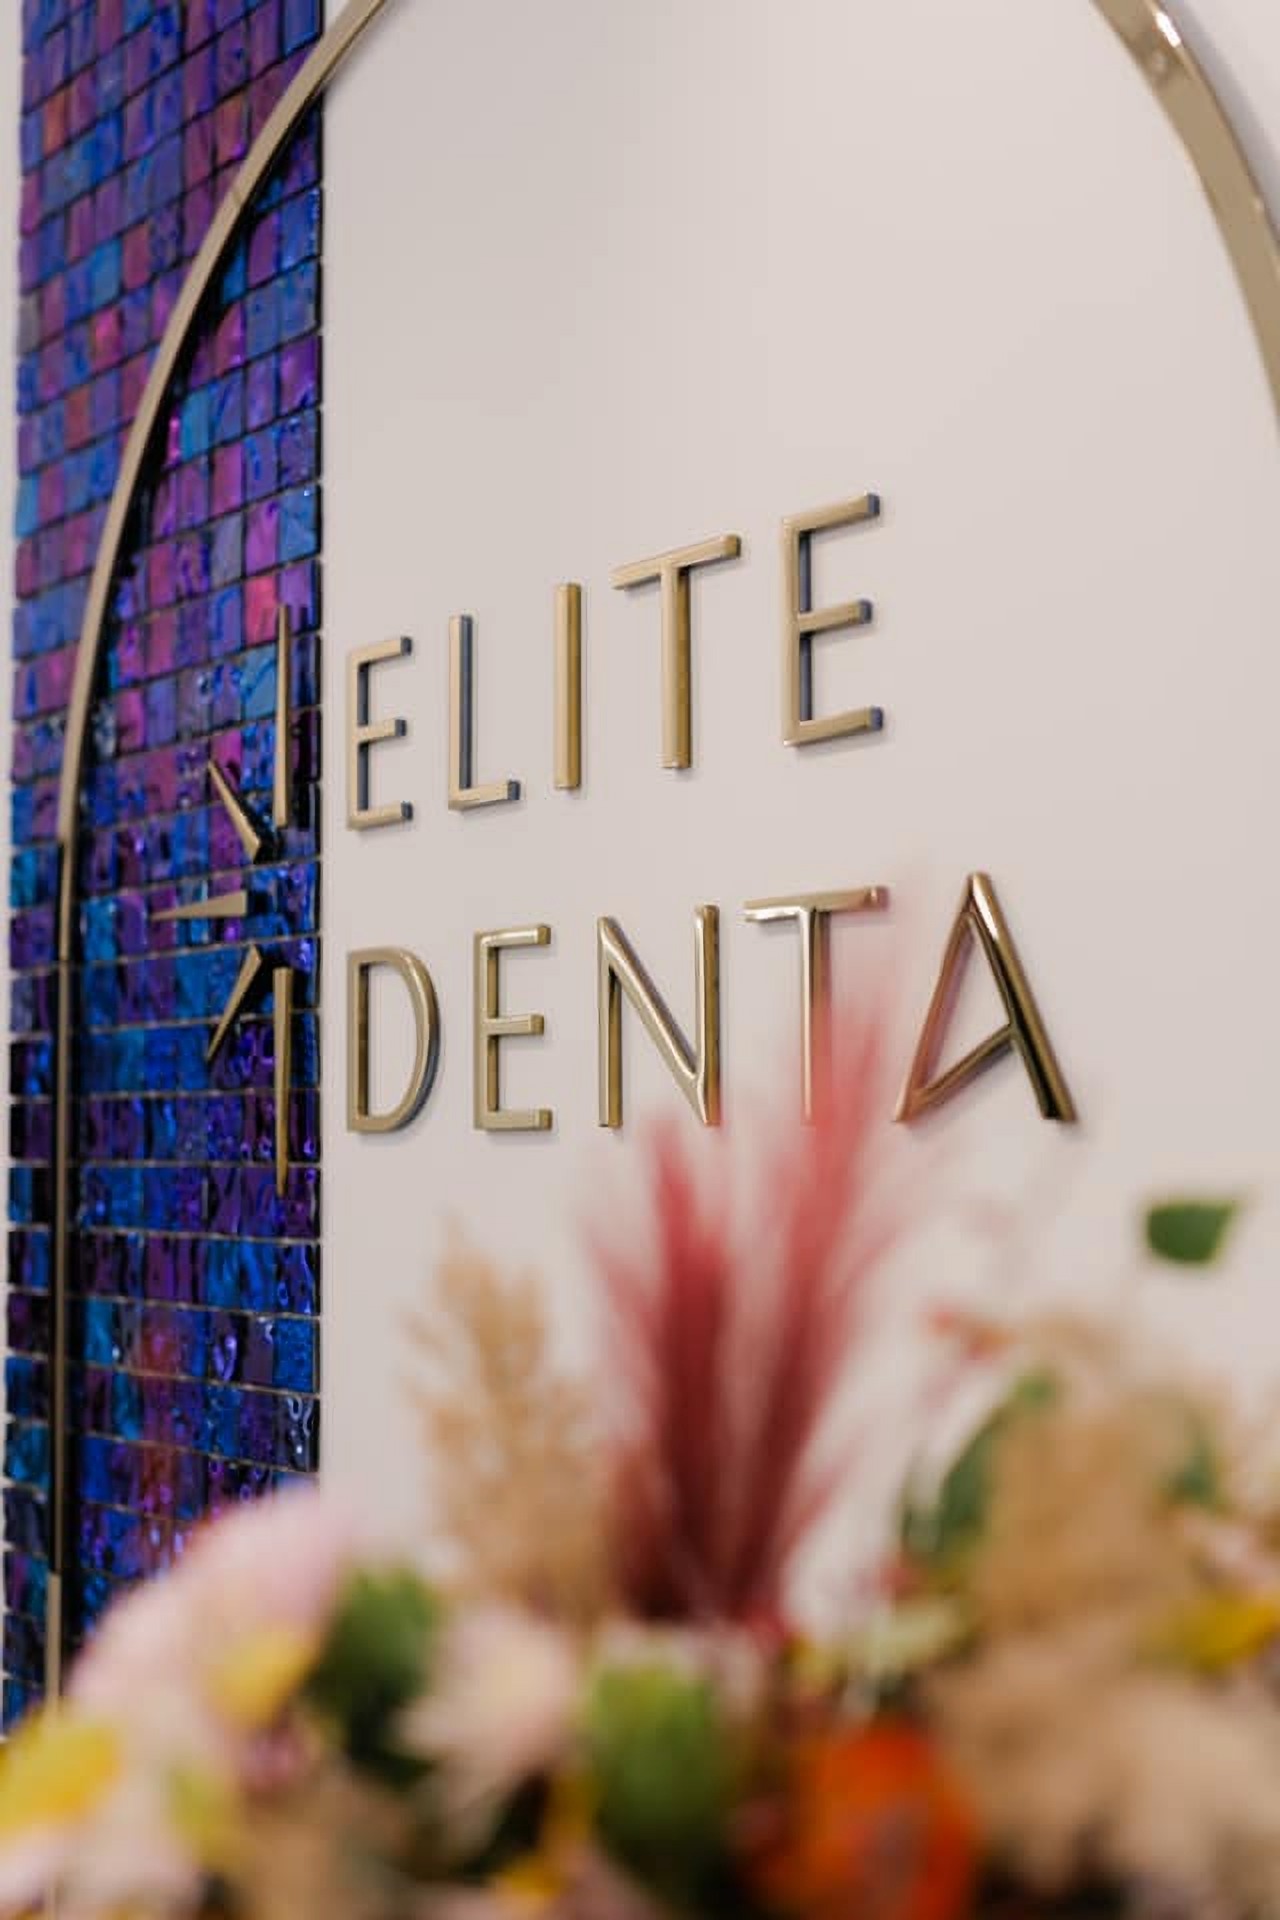 Elite Denta Clinic Hall Kharkov Ukraine